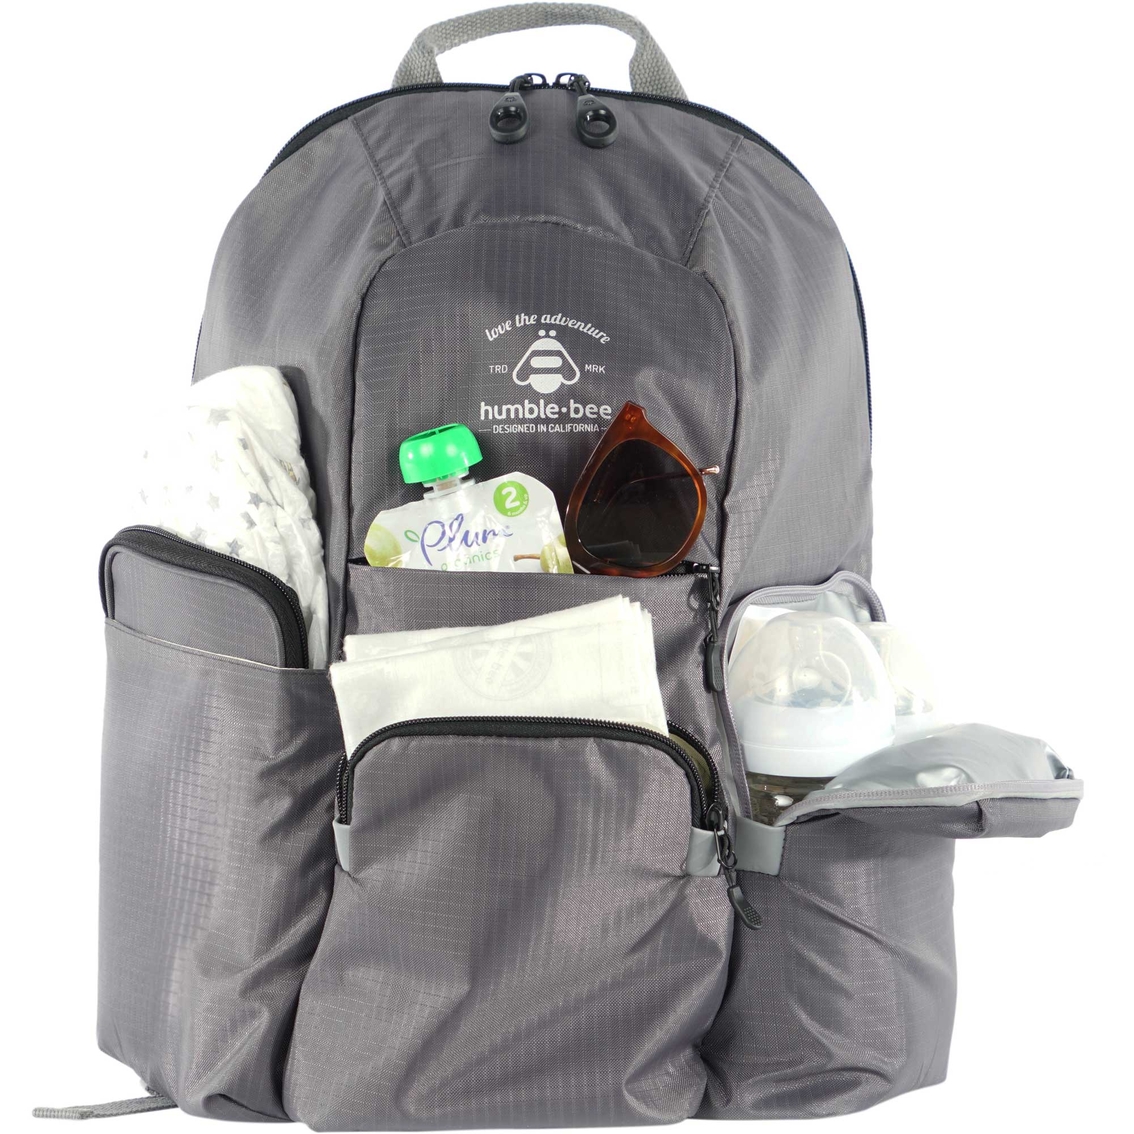 Humble-Bee Free Spirit Diaper Bag Backpack - Image 5 of 8